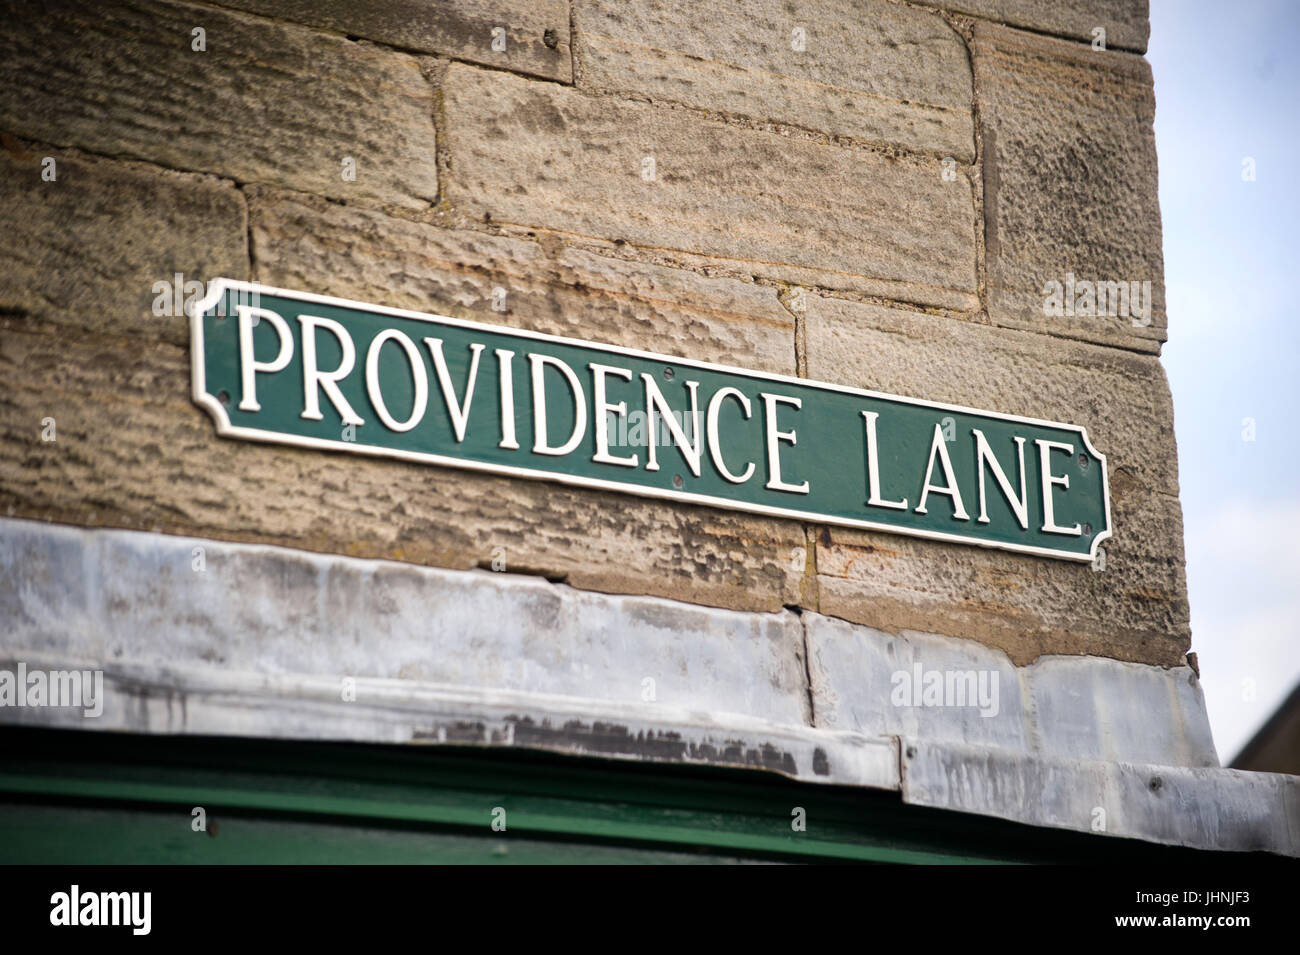 Providence Lane street sign, Rothbury, Northumberland Stock Photo